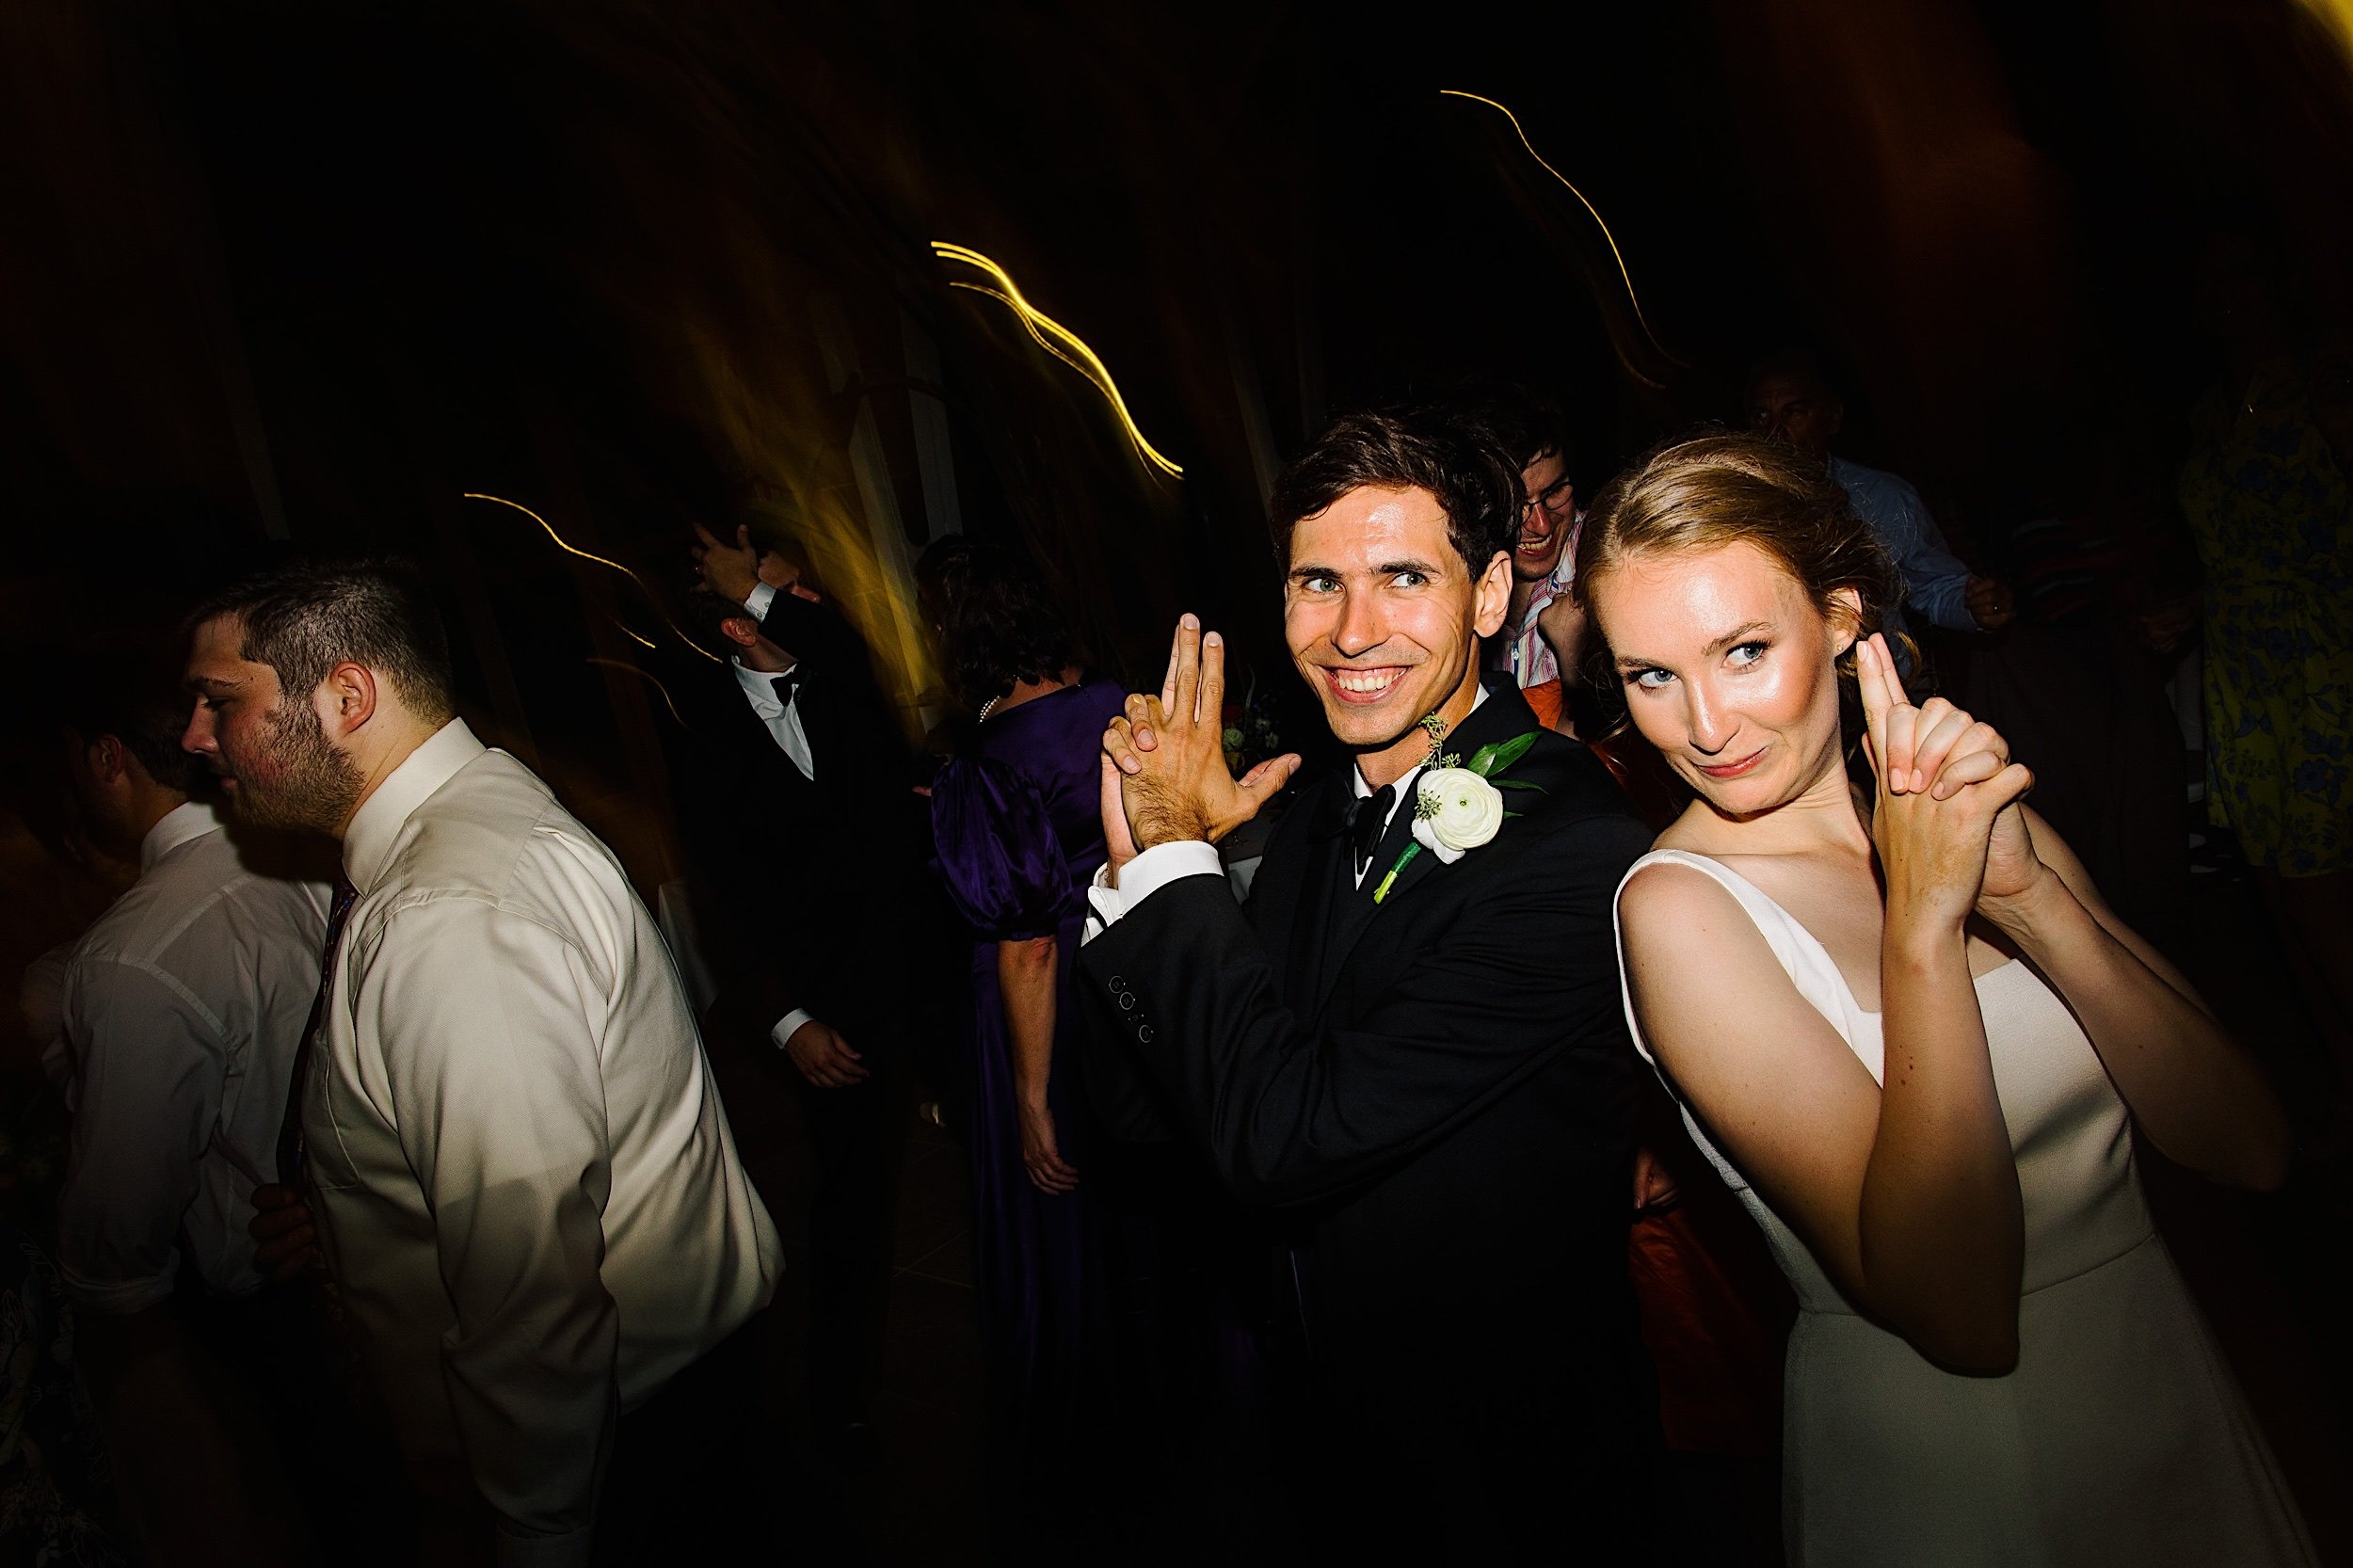 063-ZacWolfPhotography-20220821-Blog_Bride-dancing-at-Orlando-wedding-reception.jpg